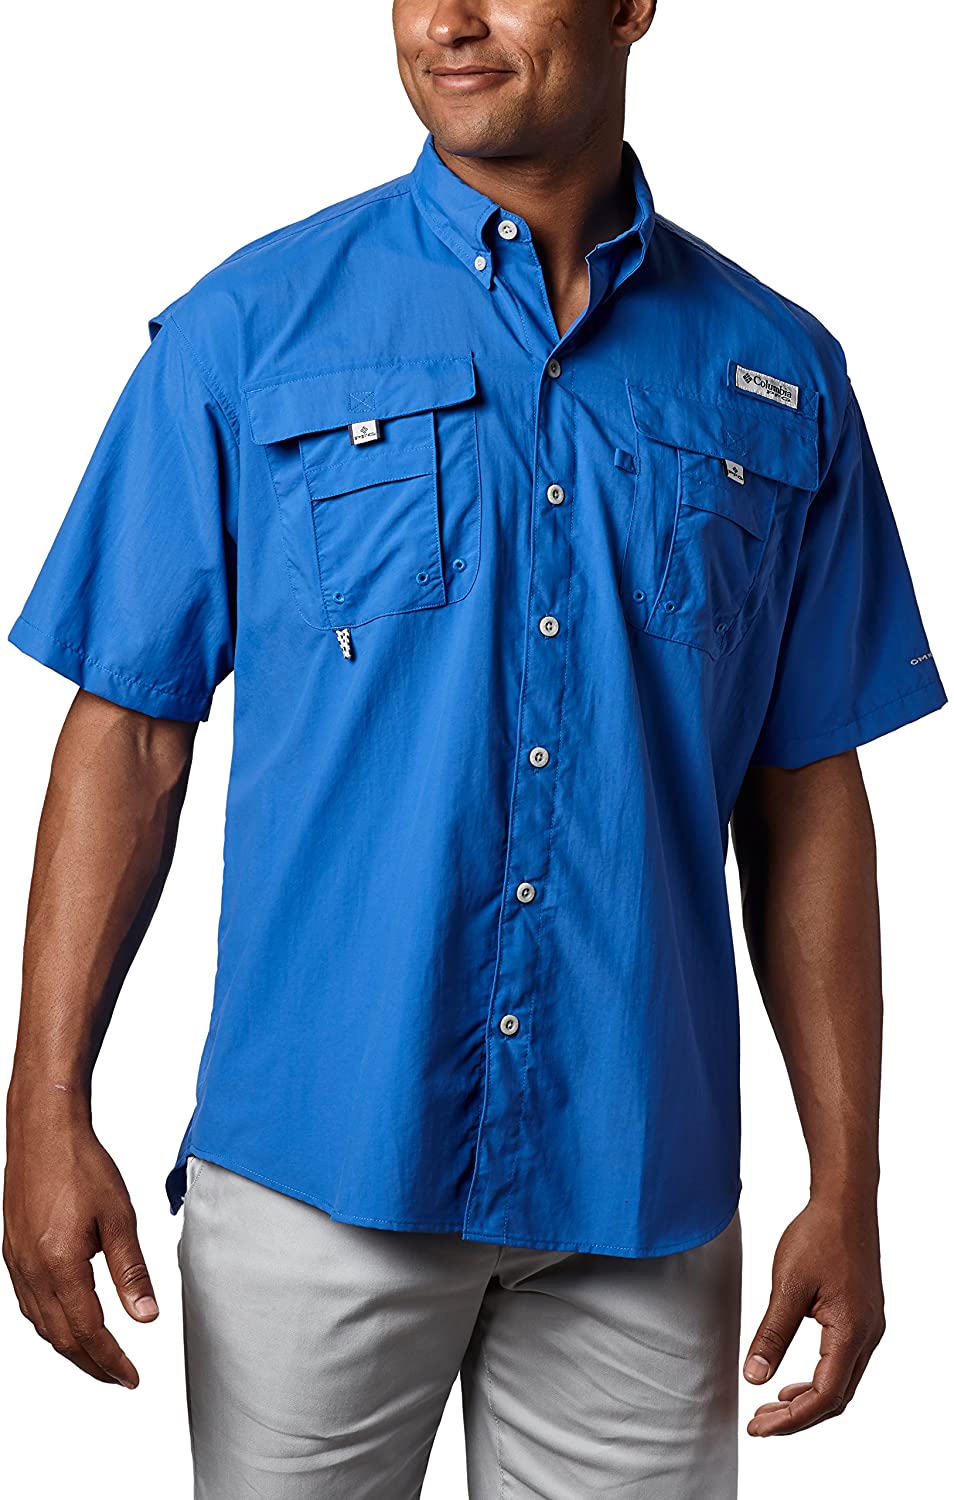 Columbia Men's Bahama II SS Shirt - image 2 of 7